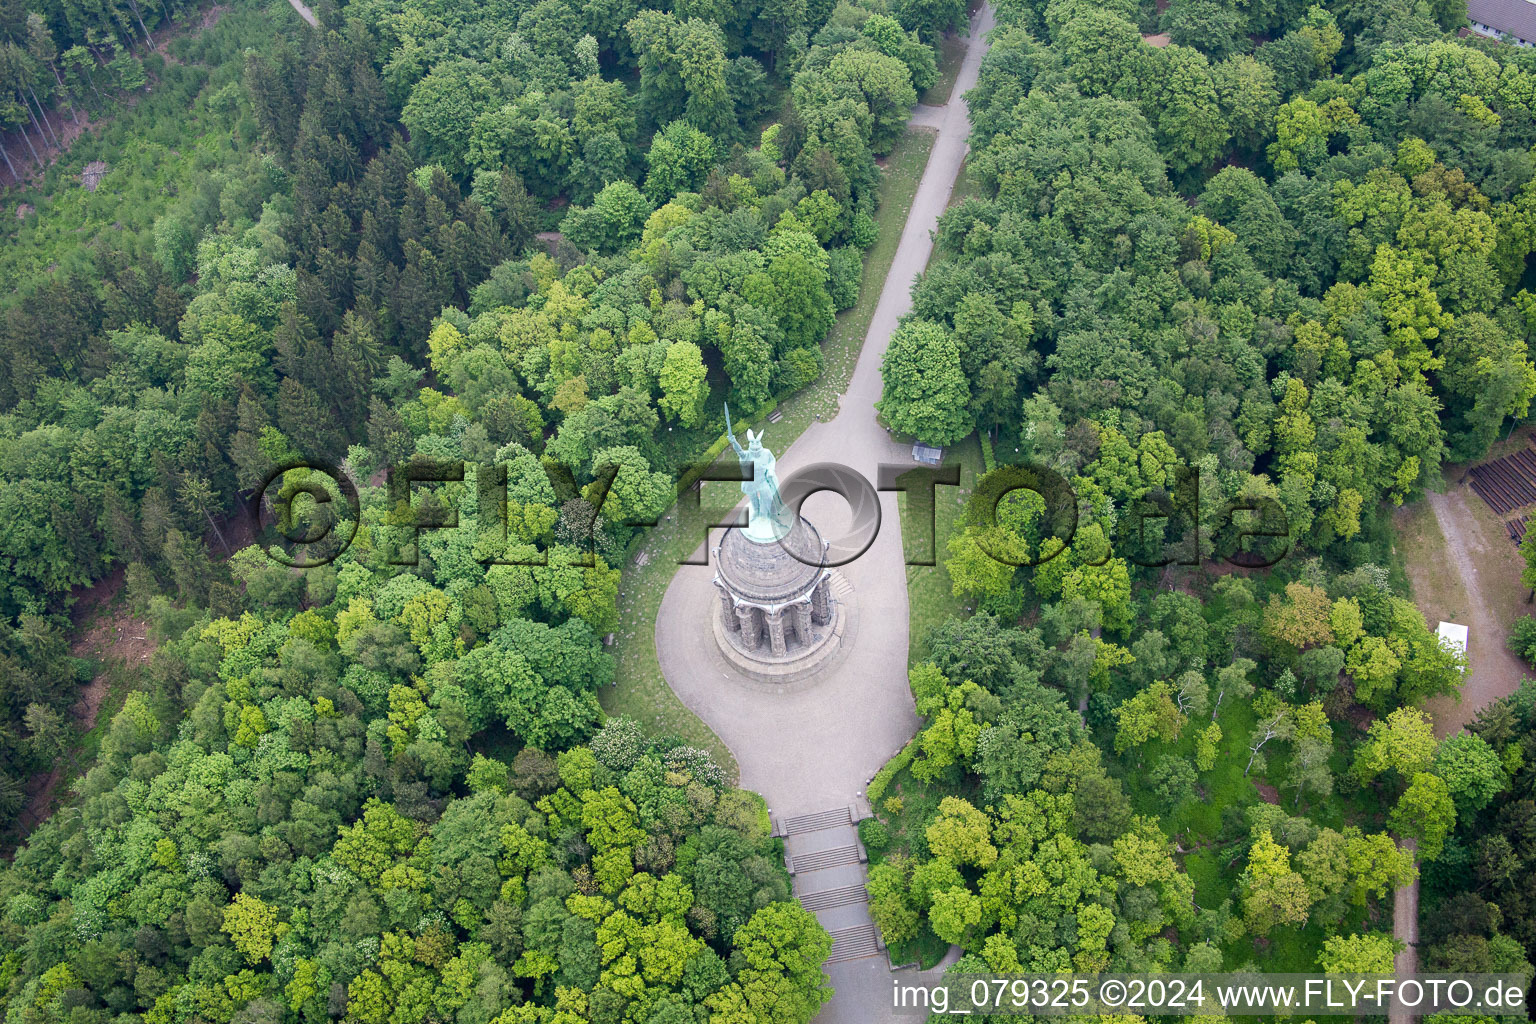 Aerial view of Hermann monument in Detmold in the state North Rhine-Westphalia, Germany